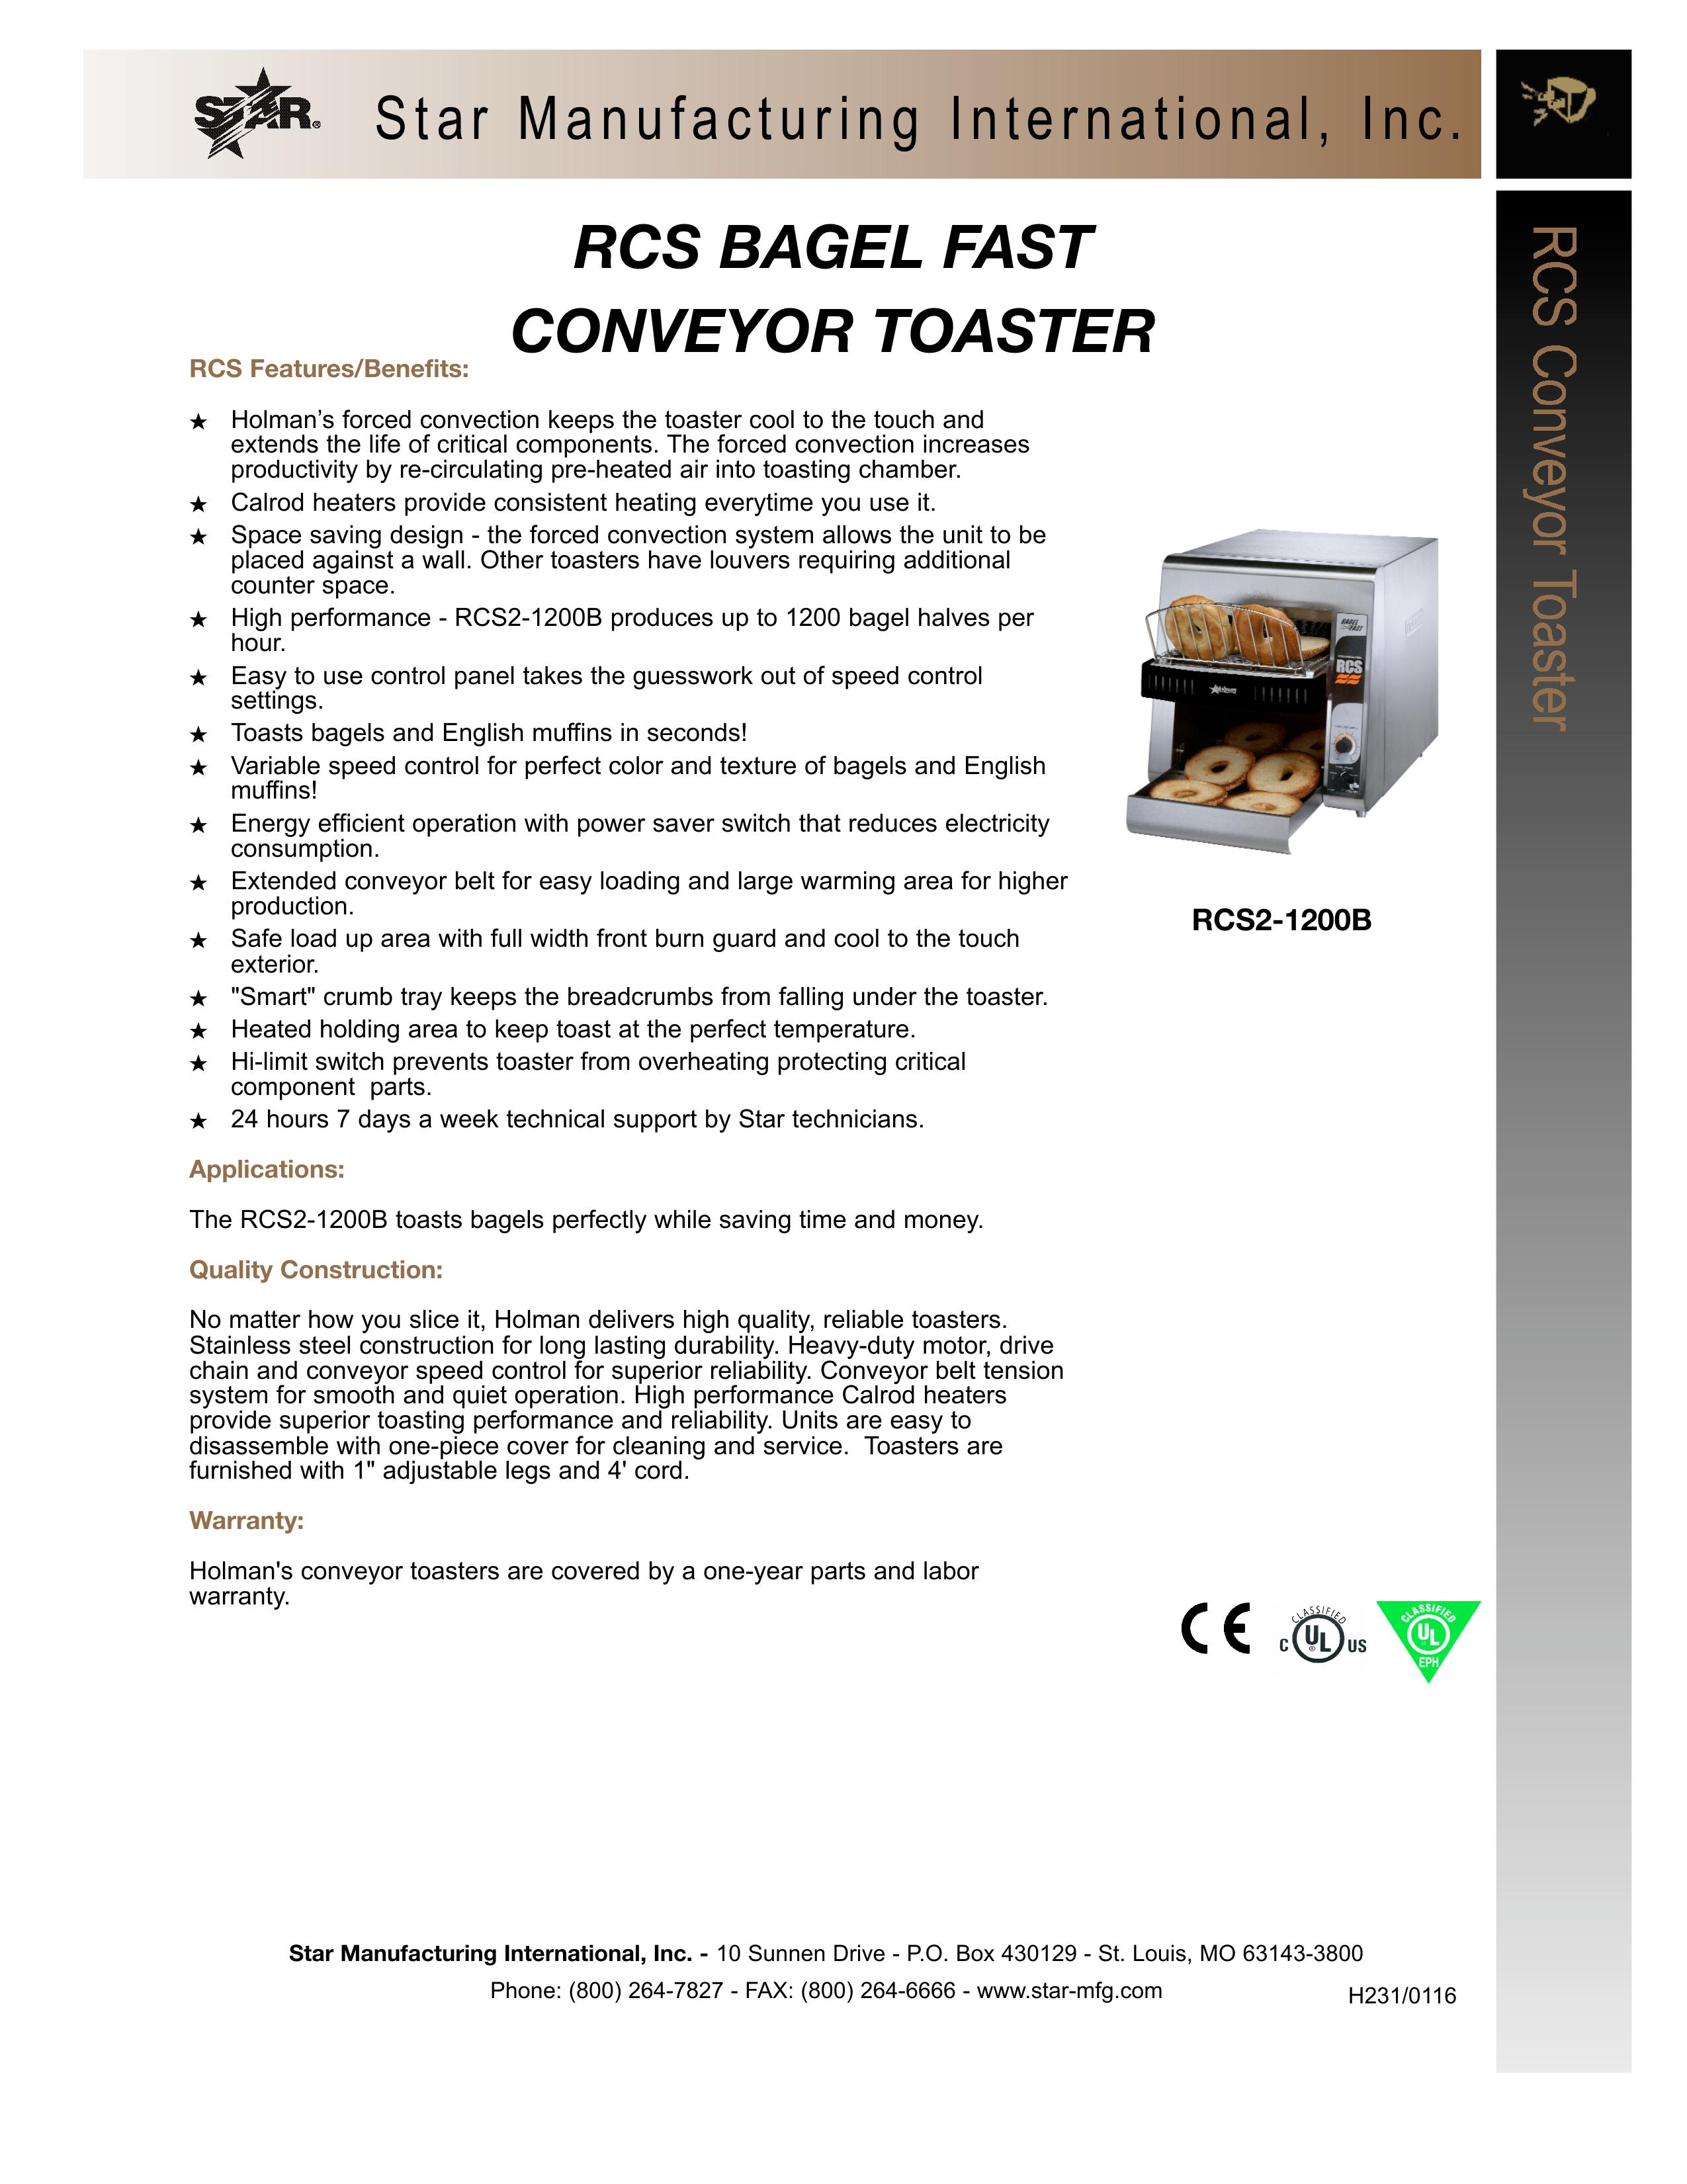 Star Manufacturing RCS2-1200B Toaster User Manual